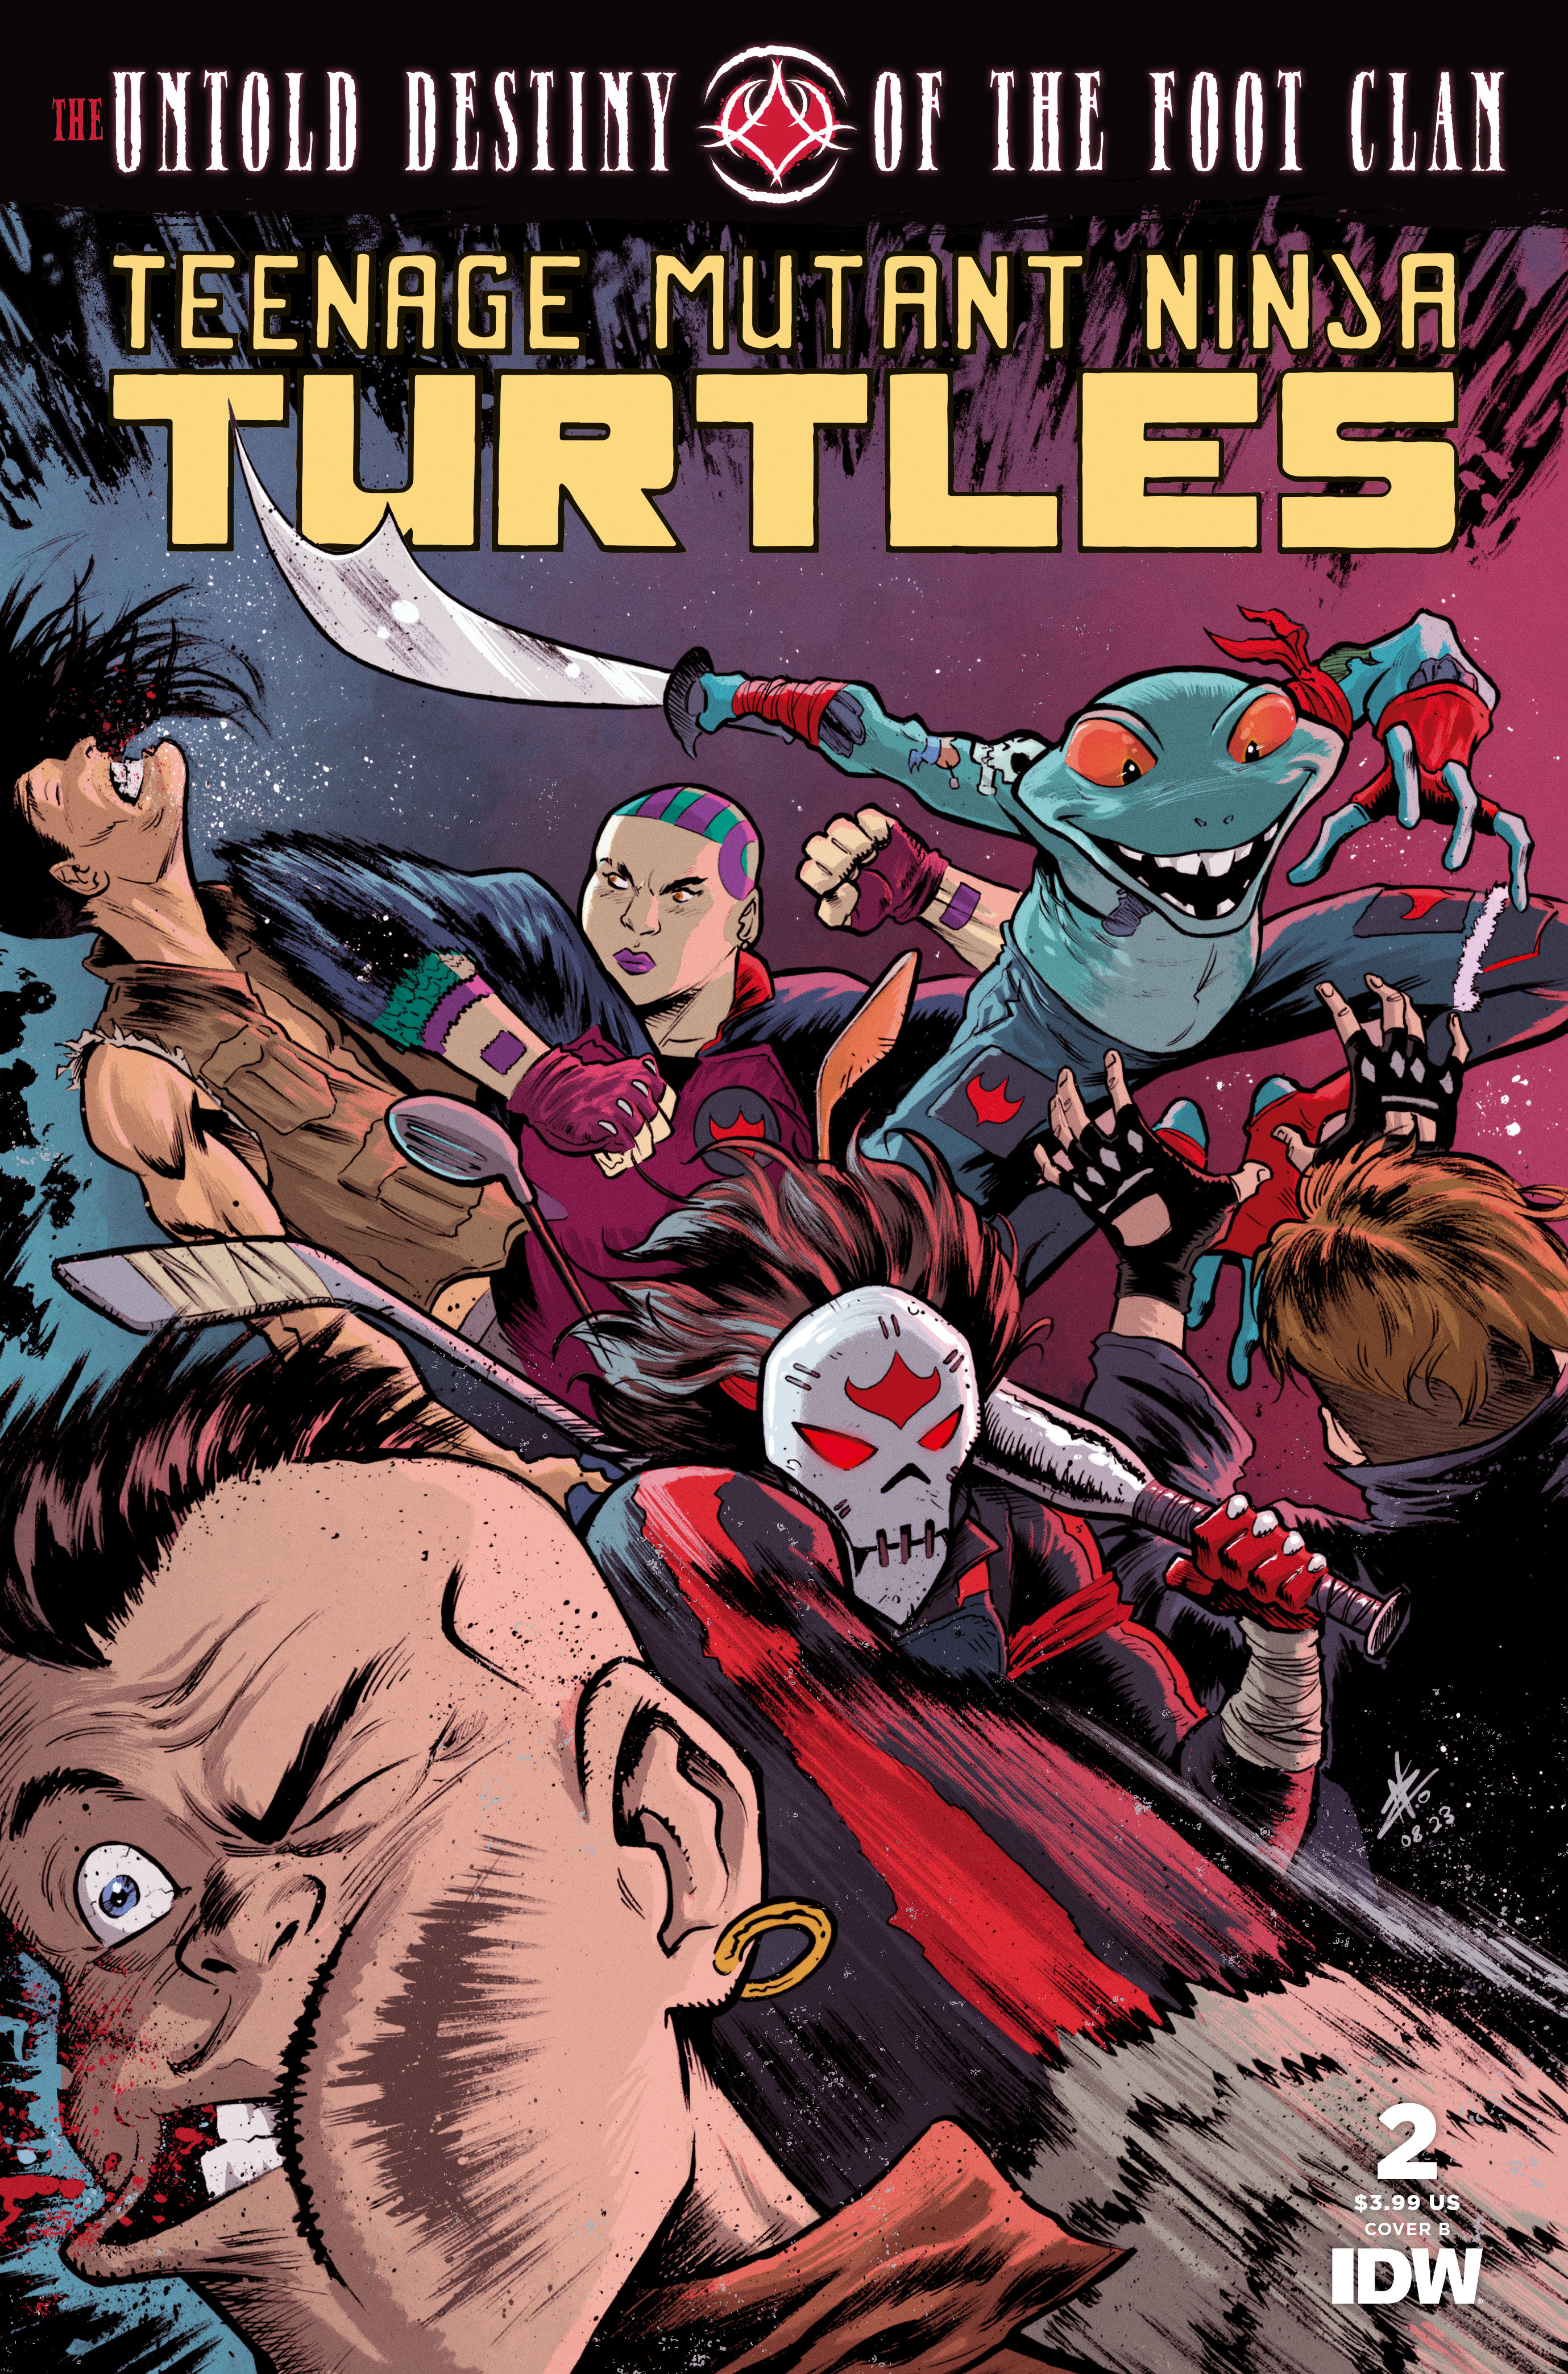 Teenage Mutant Ninja Turtles: The Untold Destiny of the Foot Clan #2 Cover B Neo